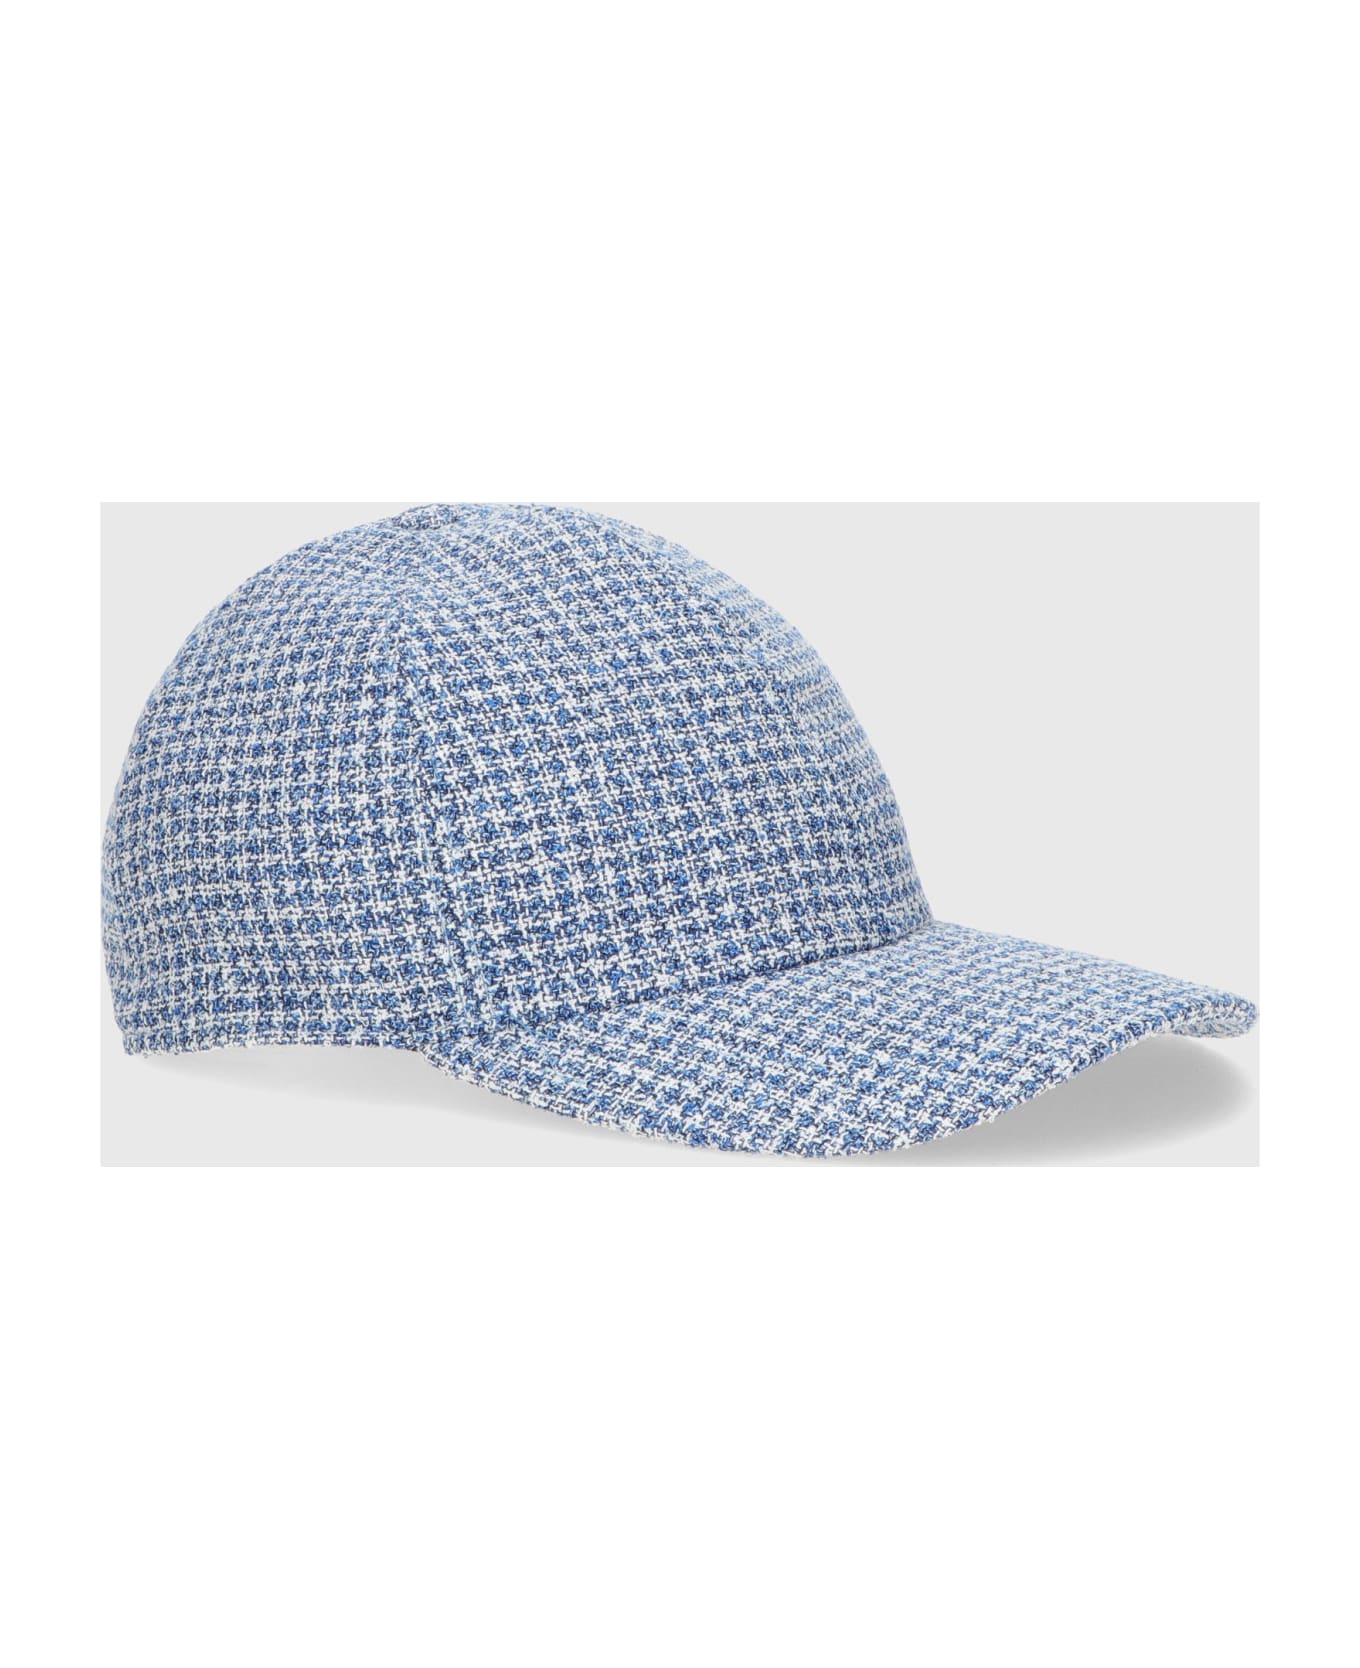 Borsalino Hiker Baseball Cap - HOUNDSTOOTH BLUE/WHITE